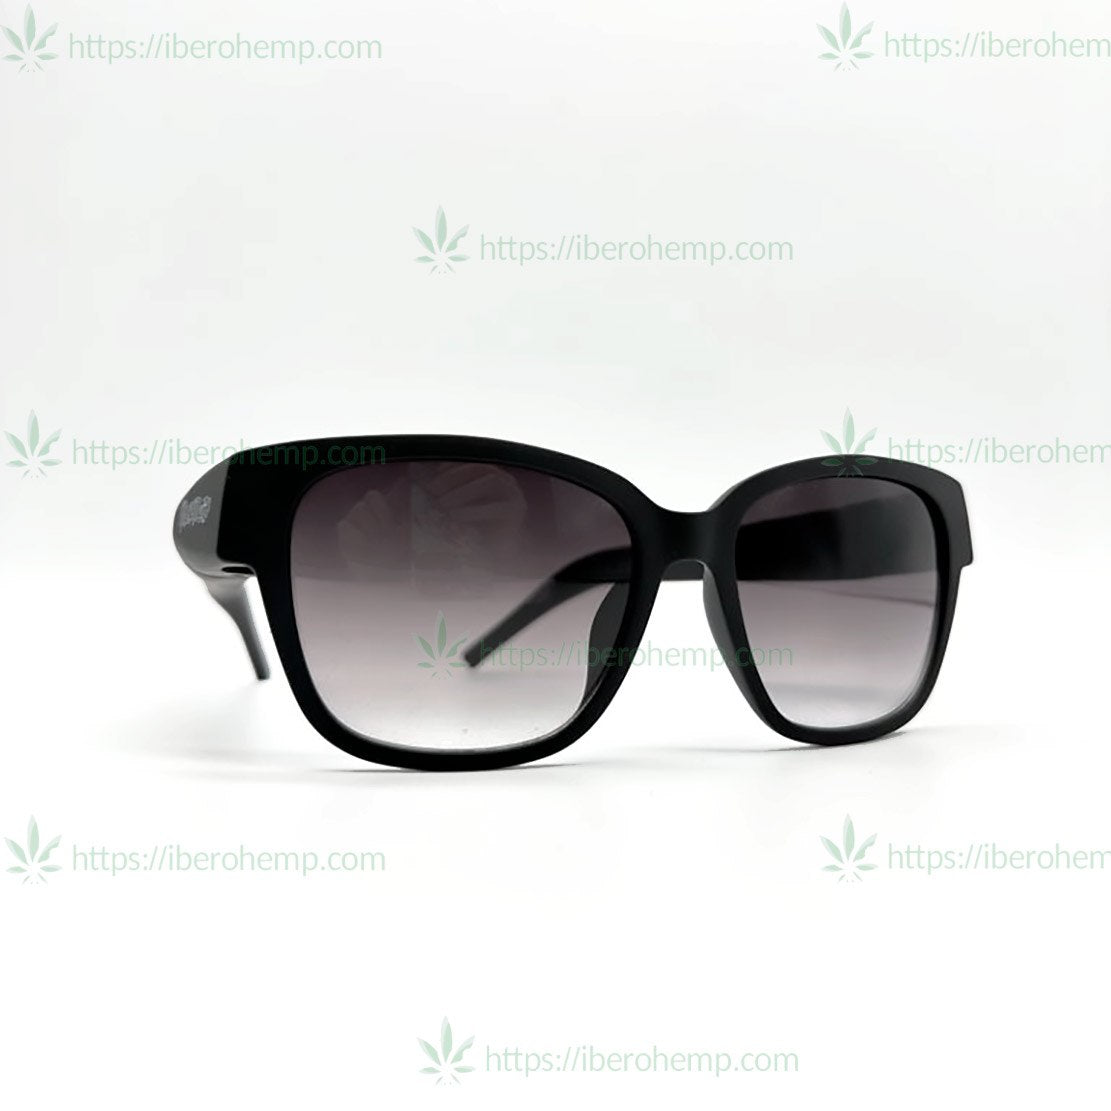 Iberohemp CBD concealment sunglasses